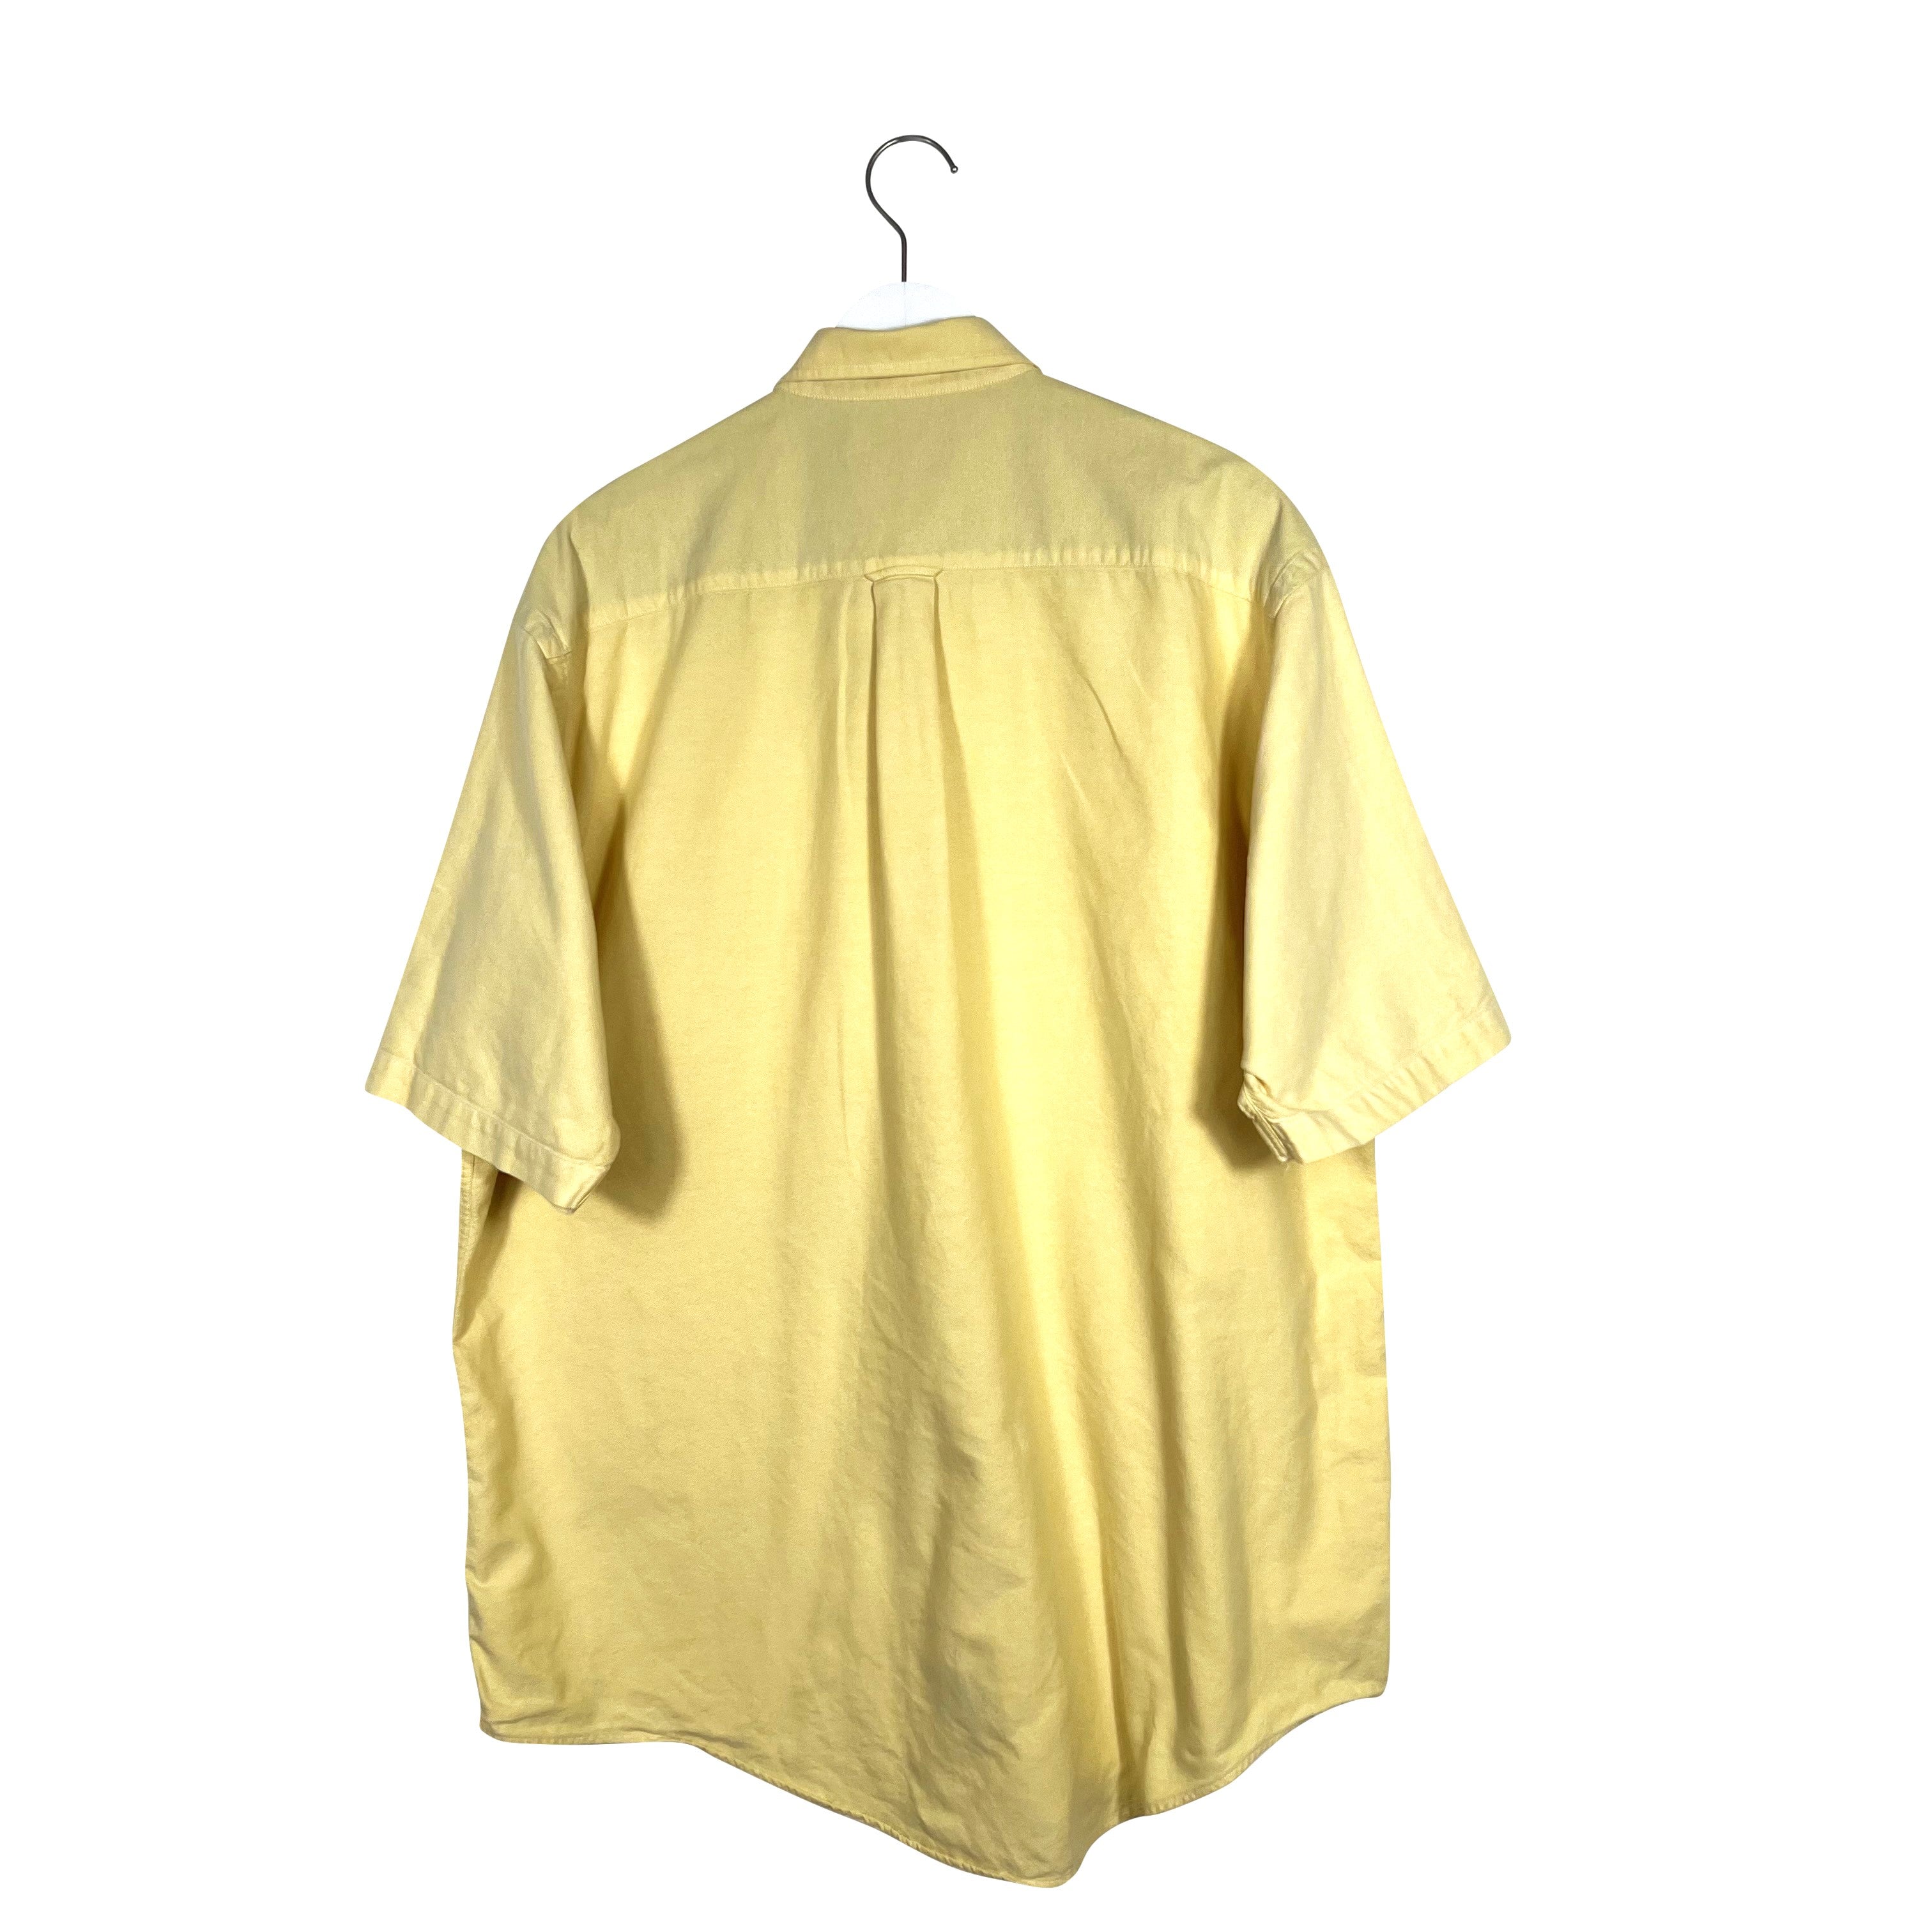 Vintage Nautica Half-Sleeve Buttoned Shirt - Men's Large